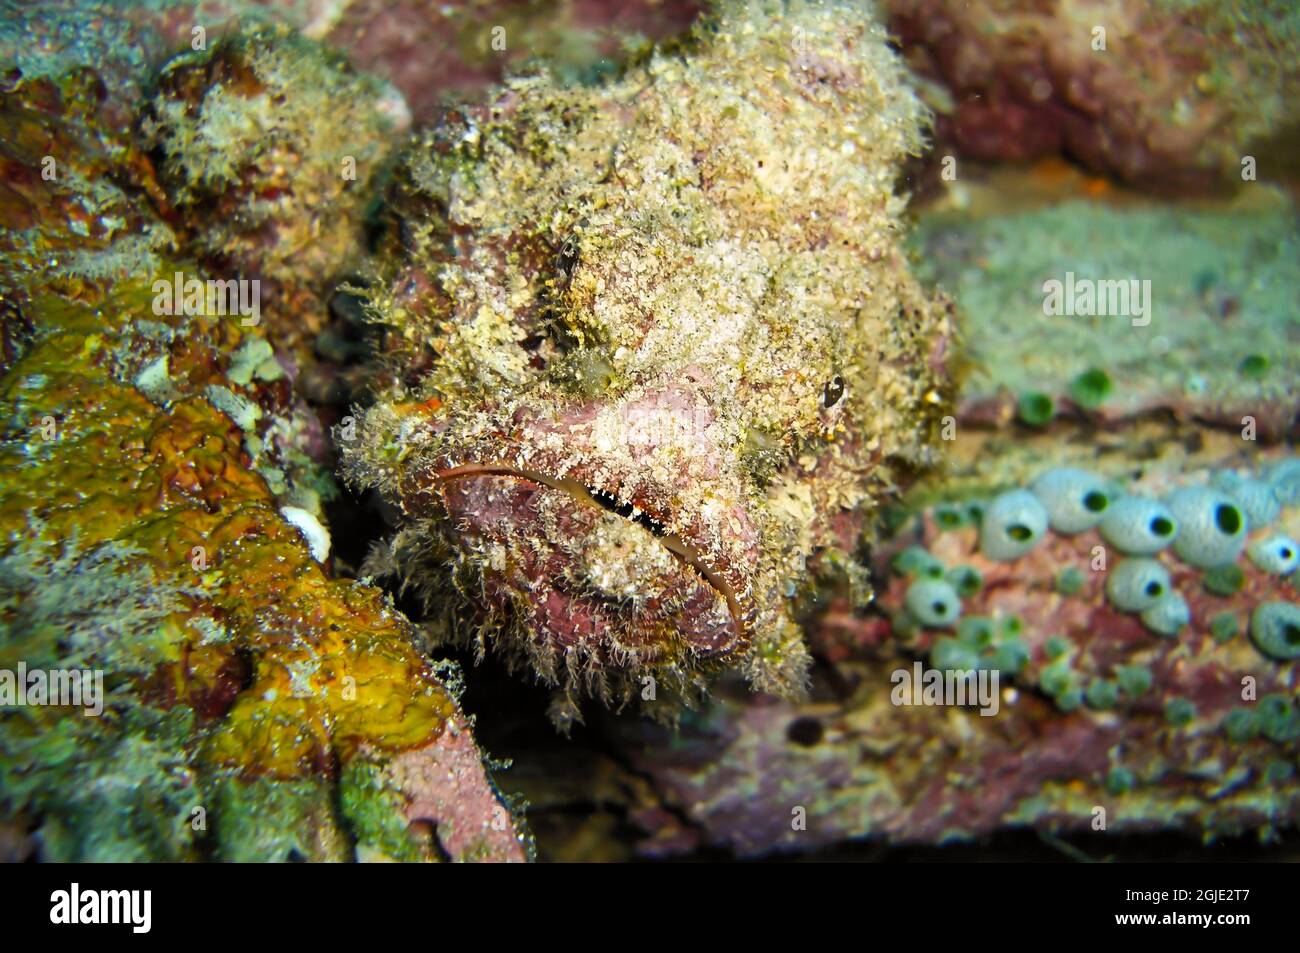 Stone fish (Synanceia Verrucosa) is swimming in the filipino sea January 13, 2012 Stock Photo